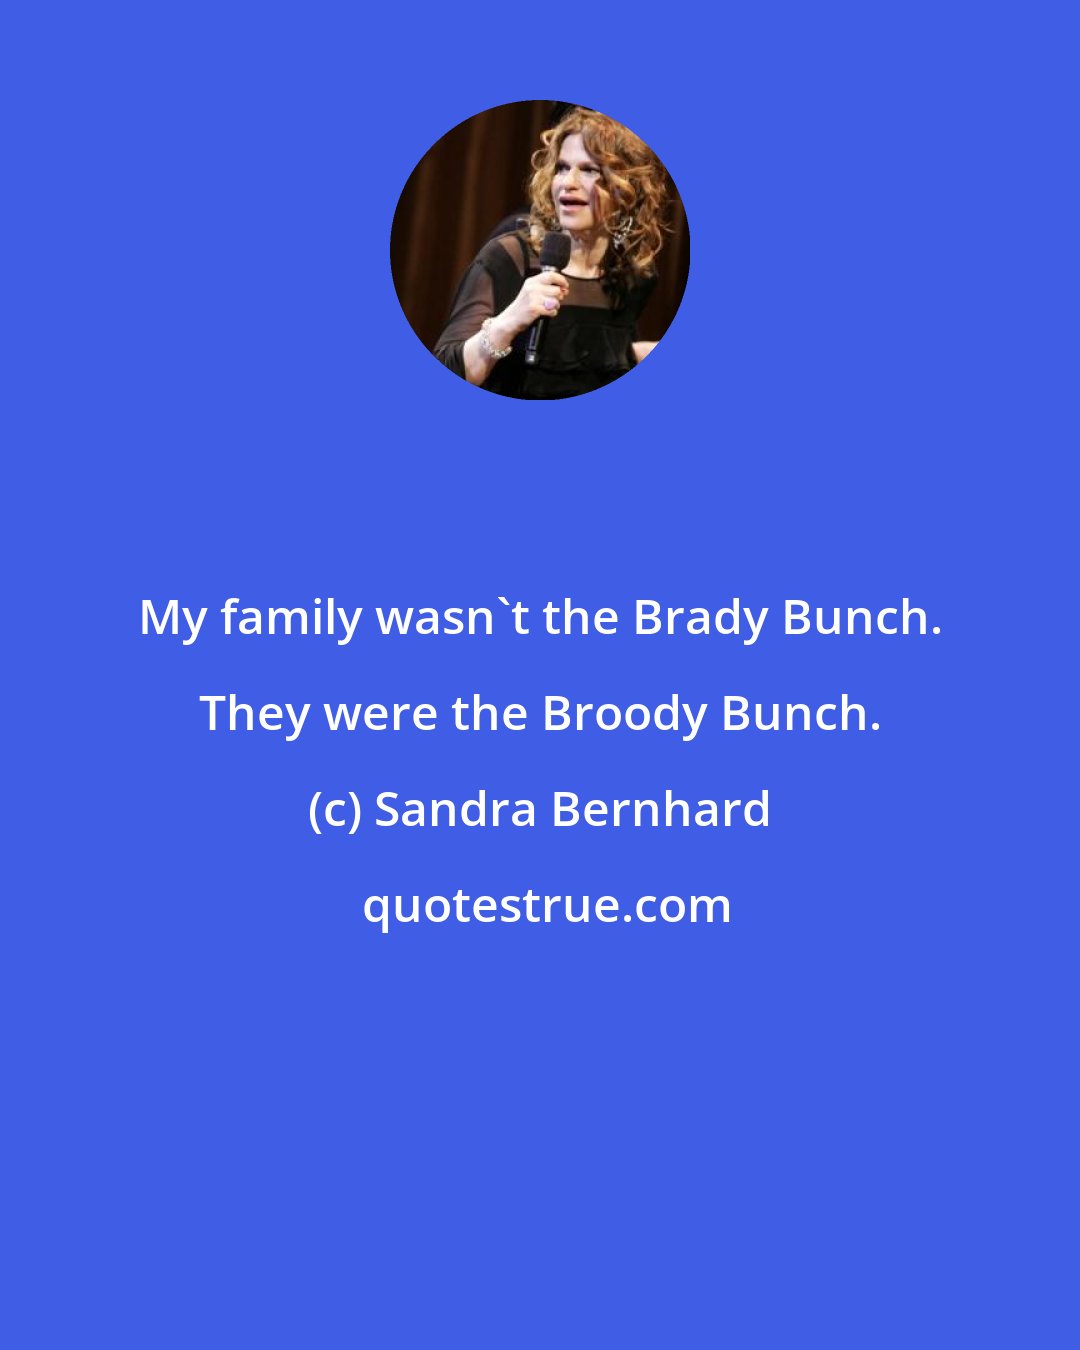 Sandra Bernhard: My family wasn't the Brady Bunch. They were the Broody Bunch.